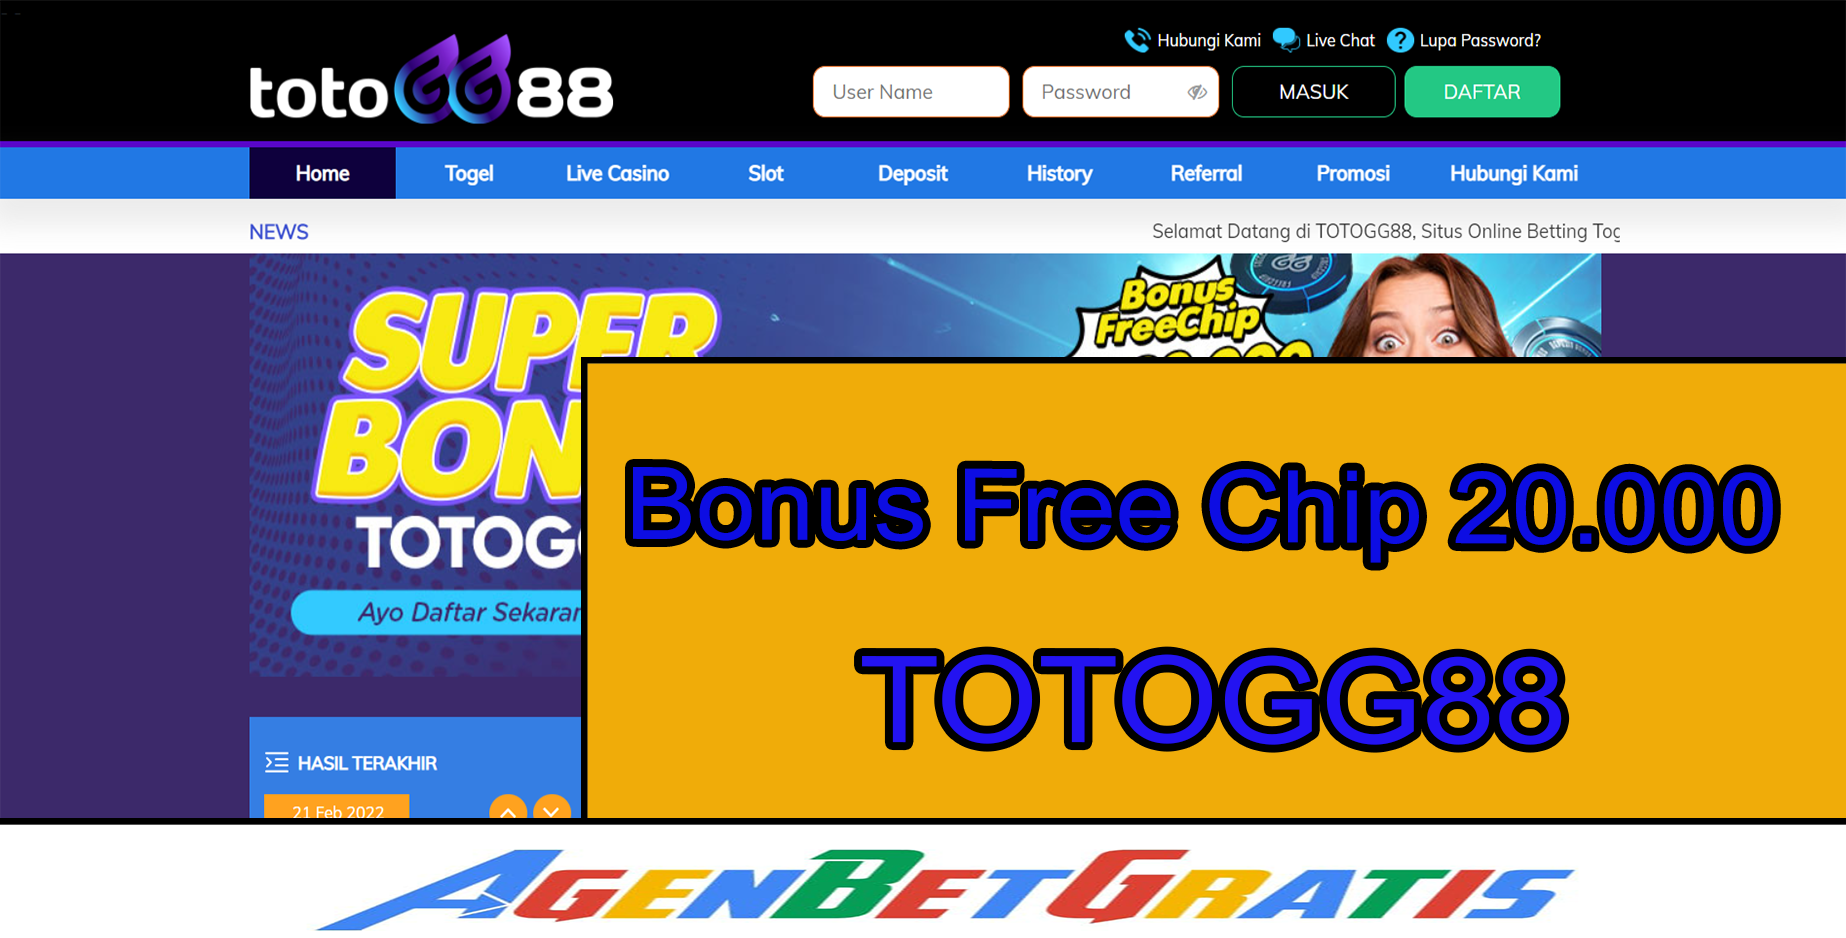 TOTOGG88 - Bonus FreeChip 20.000